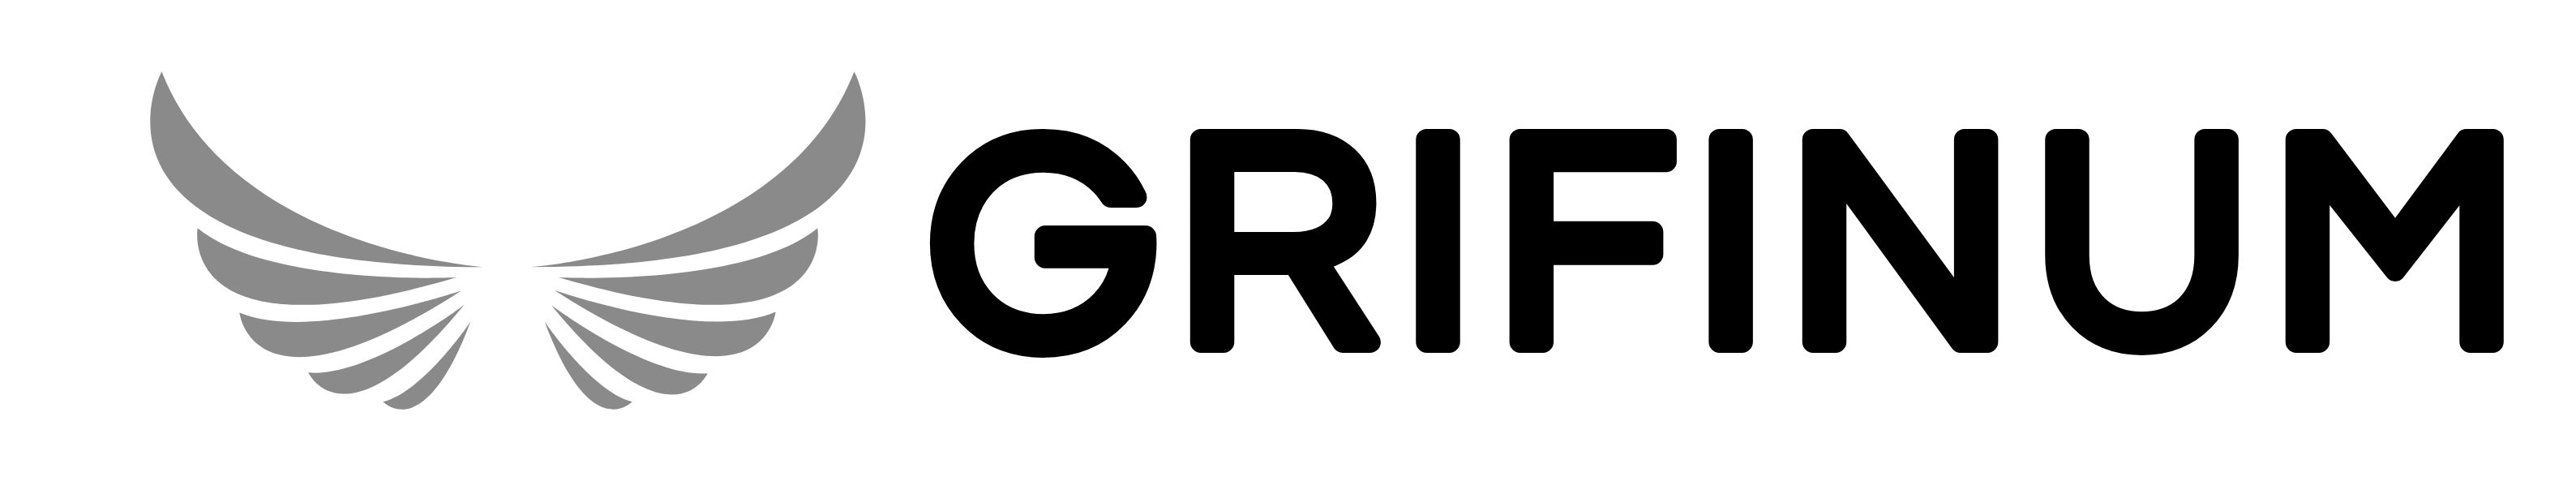 Grifinum logo